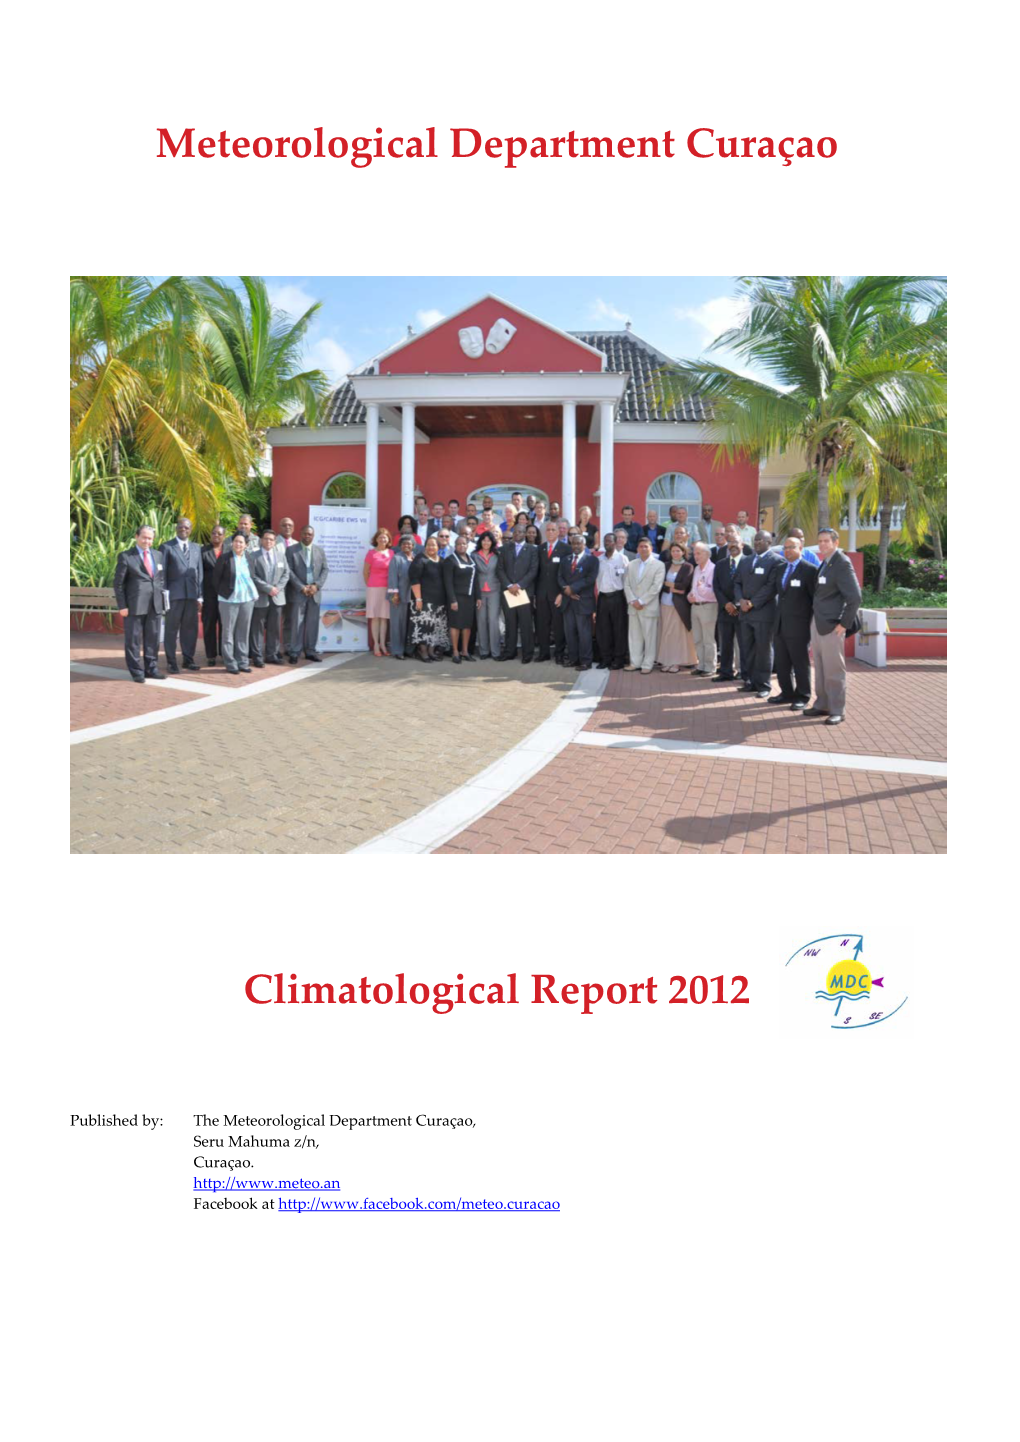 Meteorological Department Curaçao Climatological Report 2012